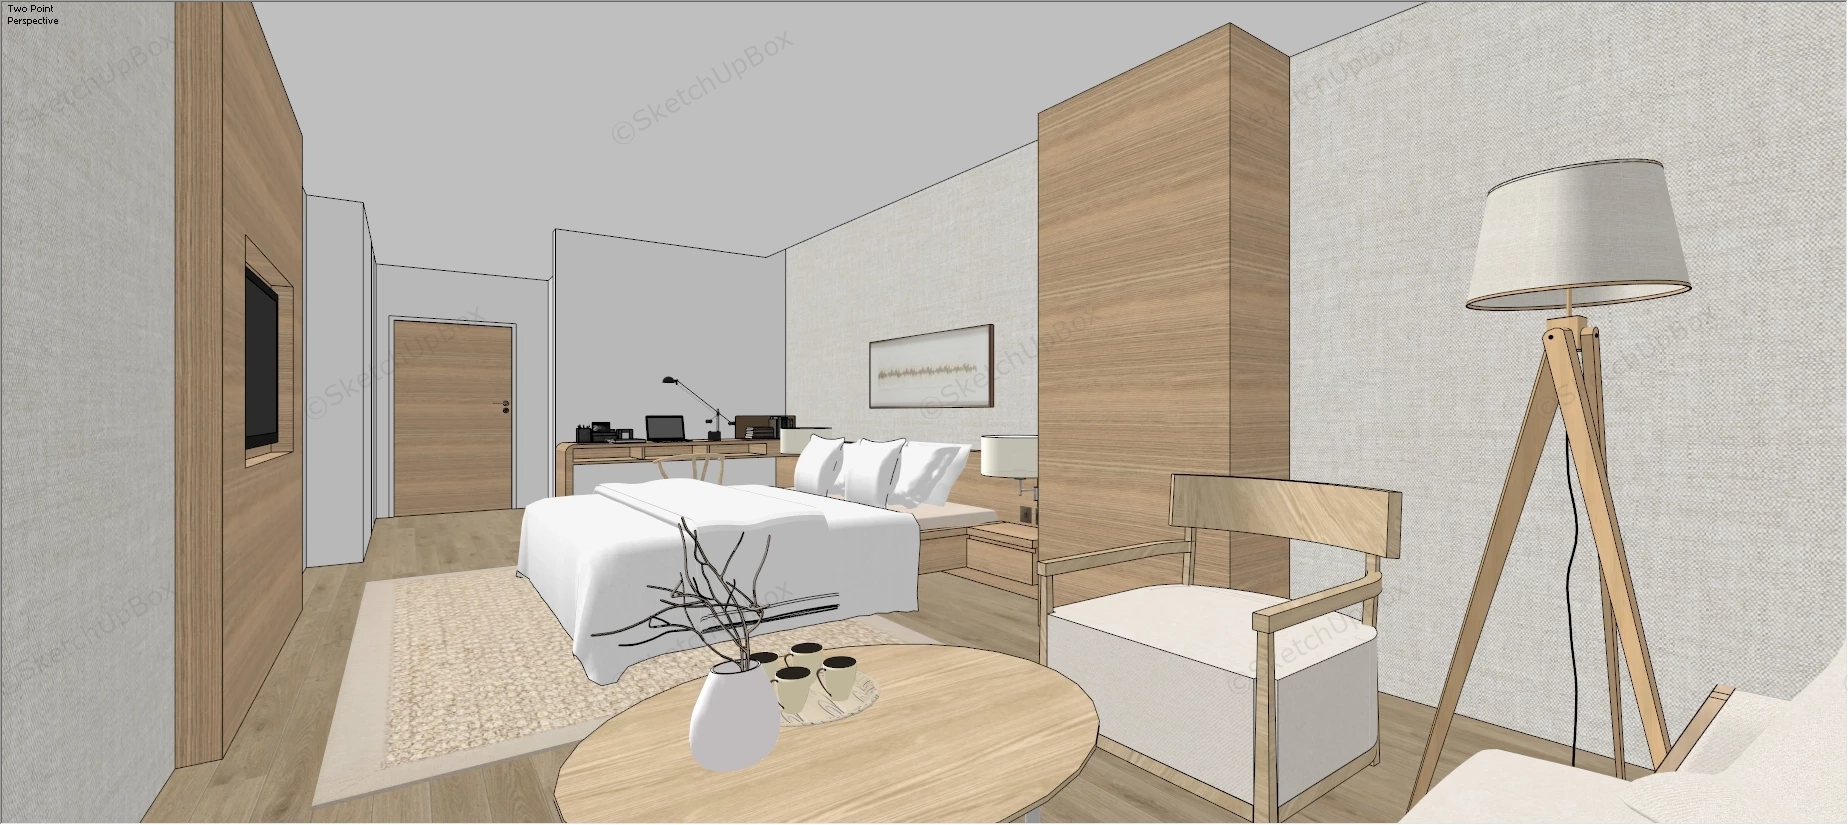 Business Hotel Room Interior Design sketchup model preview - SketchupBox